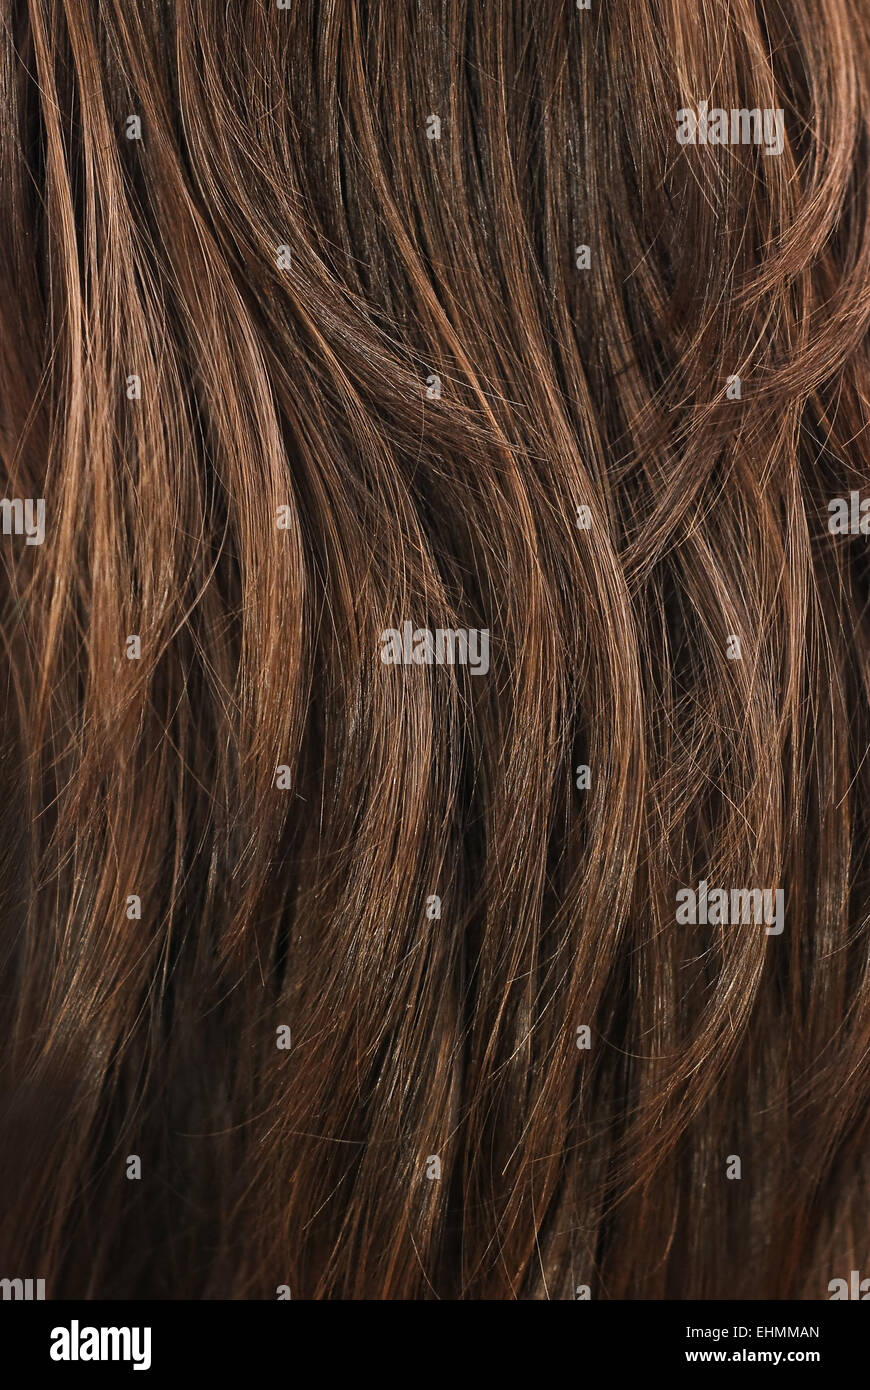 brown hair texture closeup detail Stock Photo